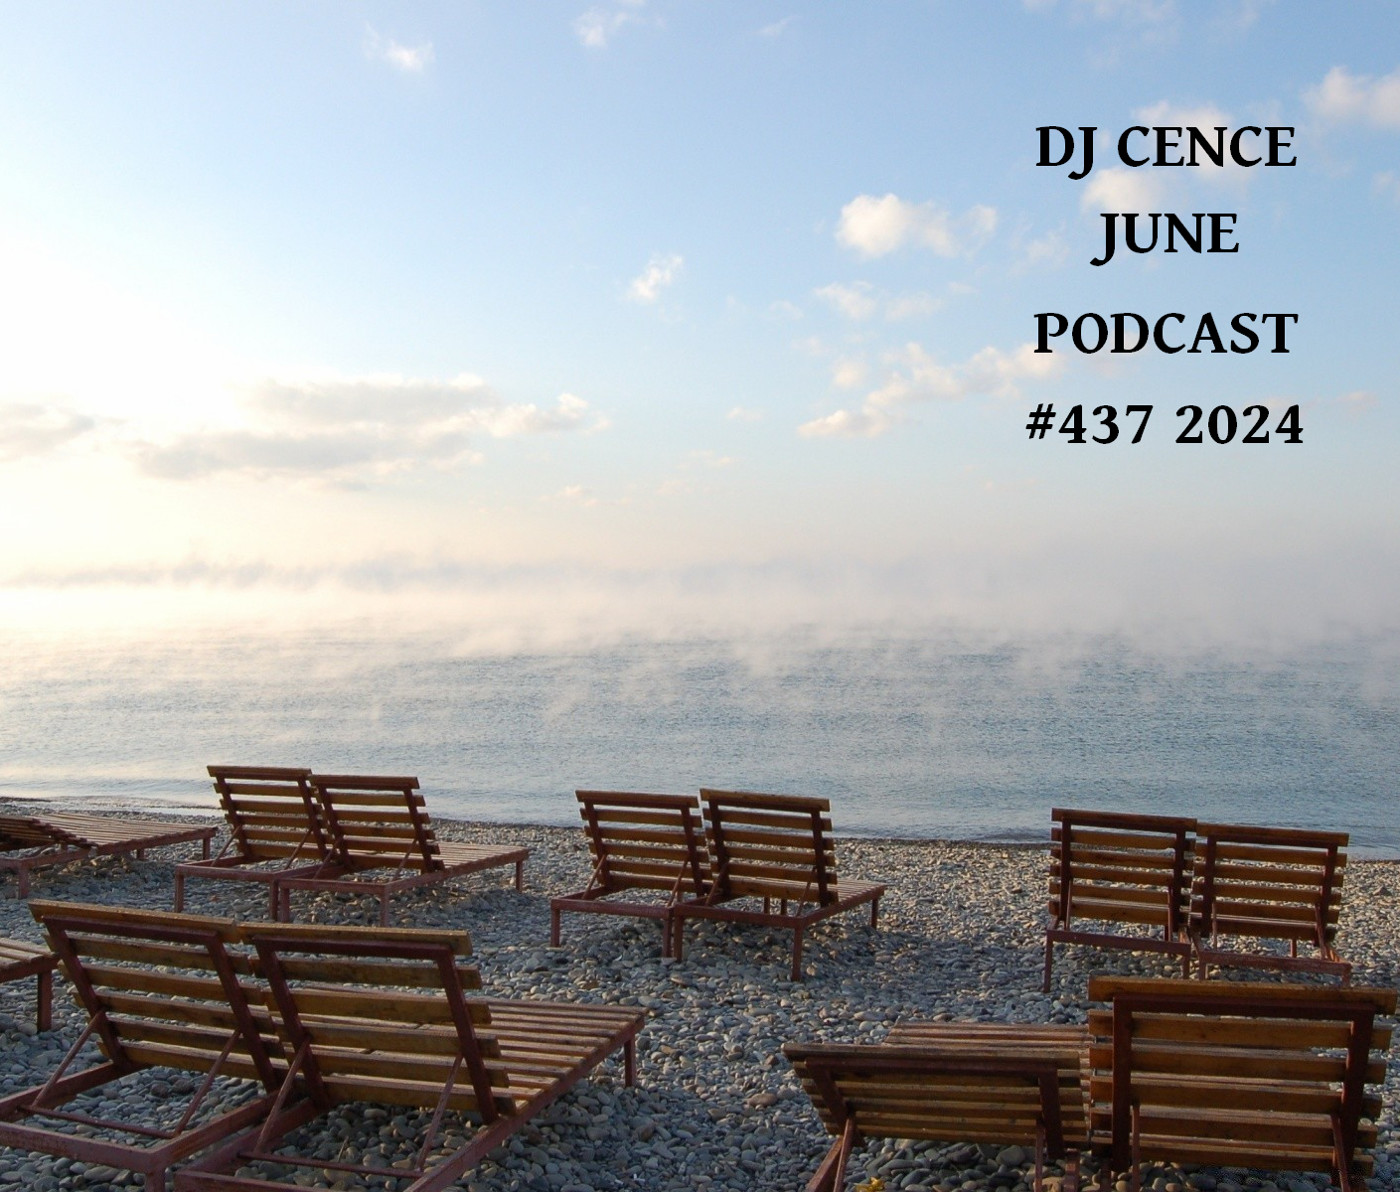 DJ CENCE JUNE PODCAST #437 #2024